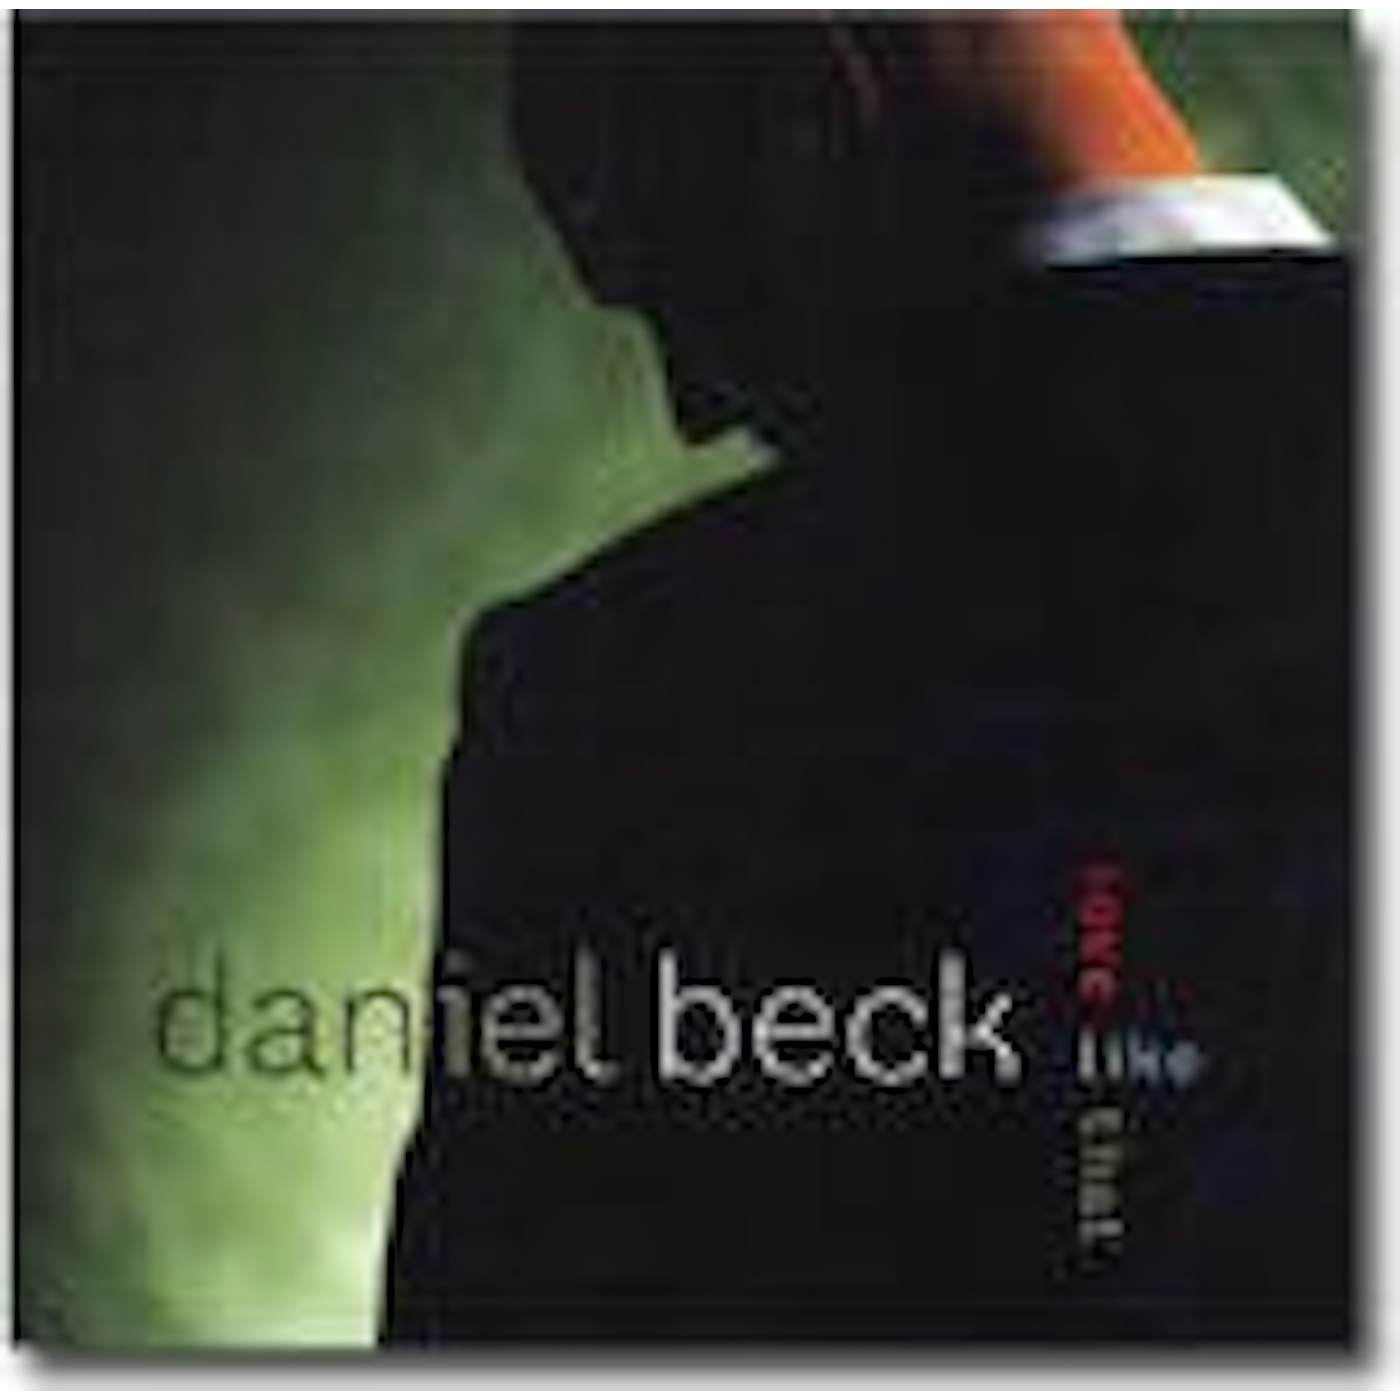 Daniel Beck LOVE LIKE THAT CD